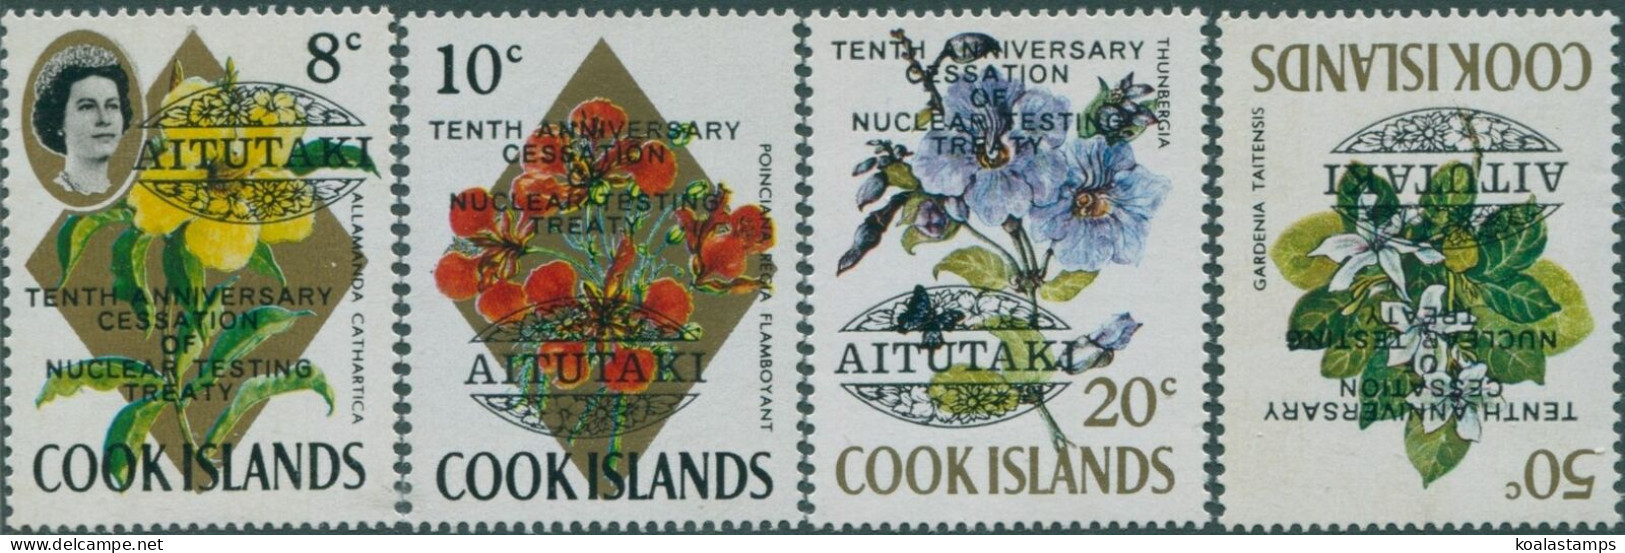 Aitutaki 1973 SG78-81 Nuclear Testing Treaty Set MNH - Cook